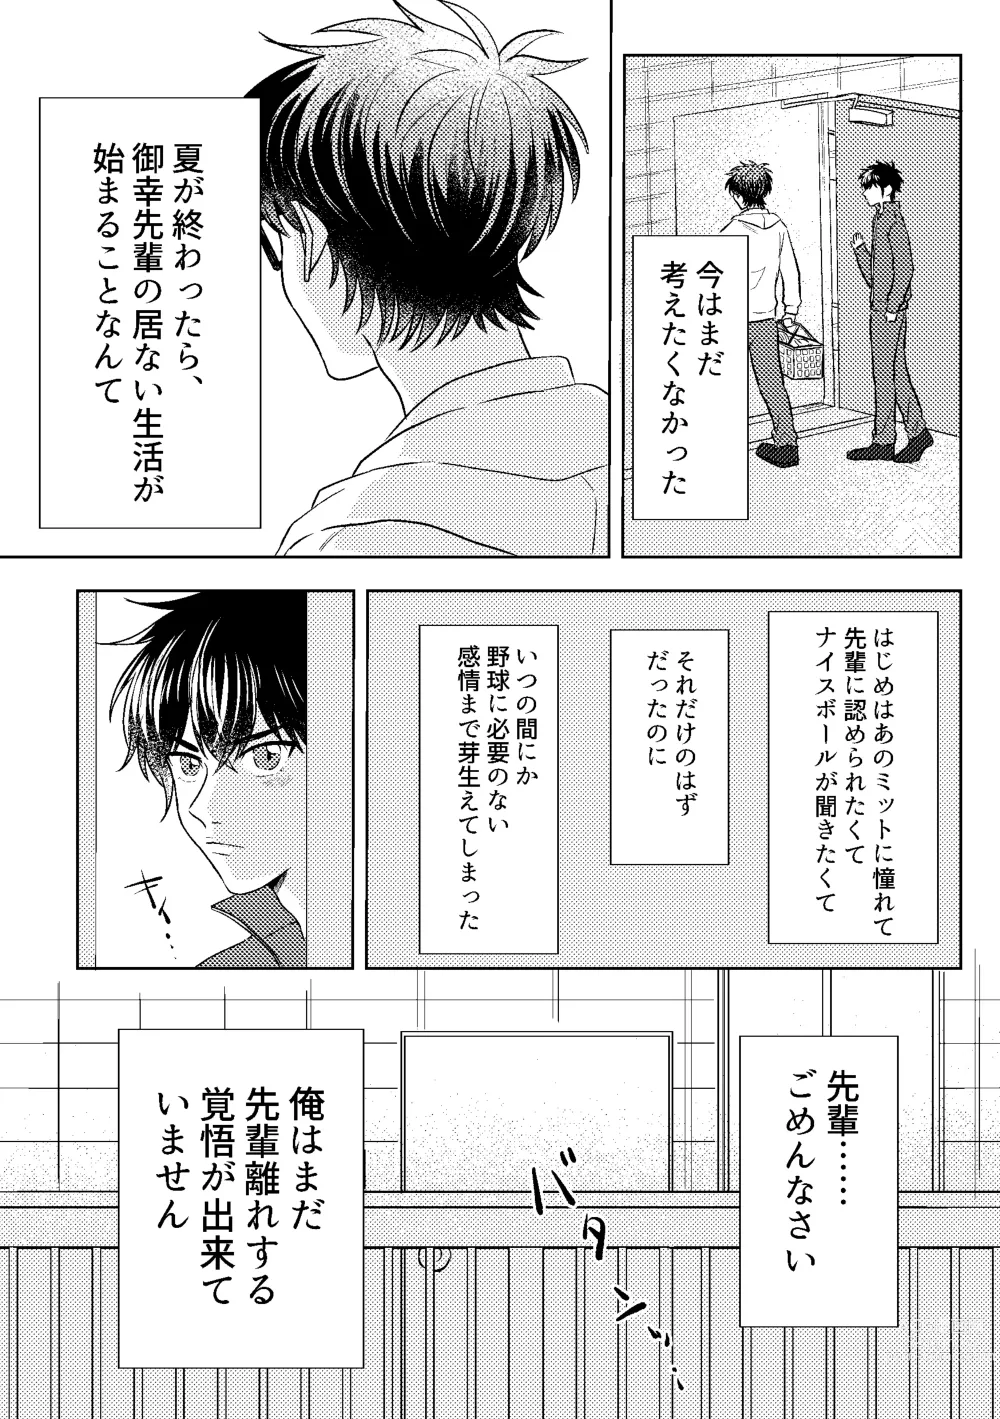 Page 22 of doujinshi Hatsukoi Sparkle